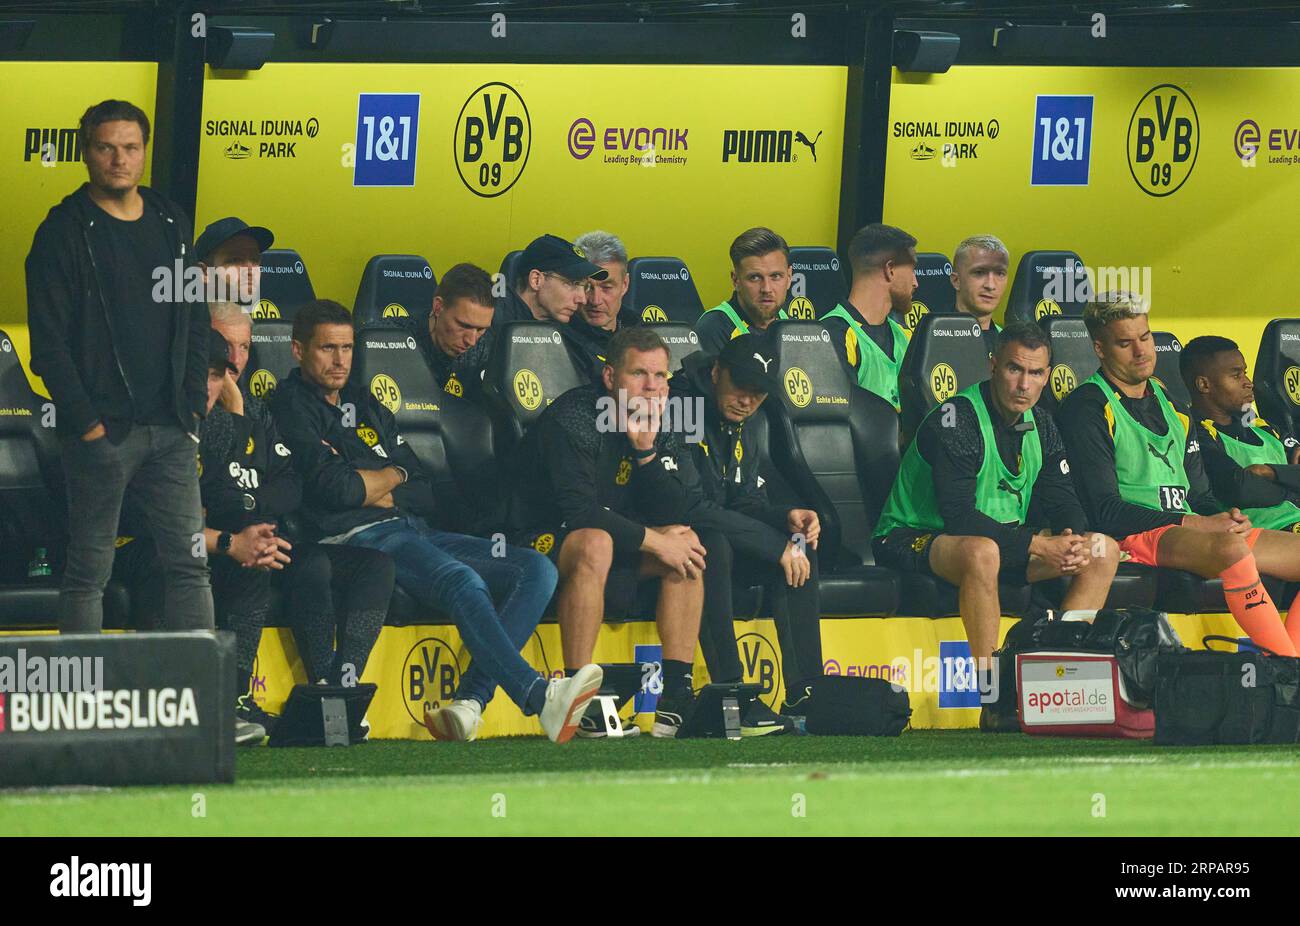 Edin Terzic, head coach, Chef - Trainer BVB Sebastian KEHL, consultant, former BVB player, Niclas Fuellkrug, Füllkrug, BVB 14 Marco REUS, BVB 11 Thorgan Hazard, BVB 10      in the match BORUSSIA DORMUND - 1. FC HEIDENHEIM 2-2  on Sept 1, 2023 in Dortmund, Germany. Season 2023/2024, 1.Bundesliga, BVB, matchday 3, 3.Spieltag © Peter Schatz / Alamy Live News    - DFL REGULATIONS PROHIBIT ANY USE OF PHOTOGRAPHS as IMAGE SEQUENCES and/or QUASI-VIDEO - Stock Photo